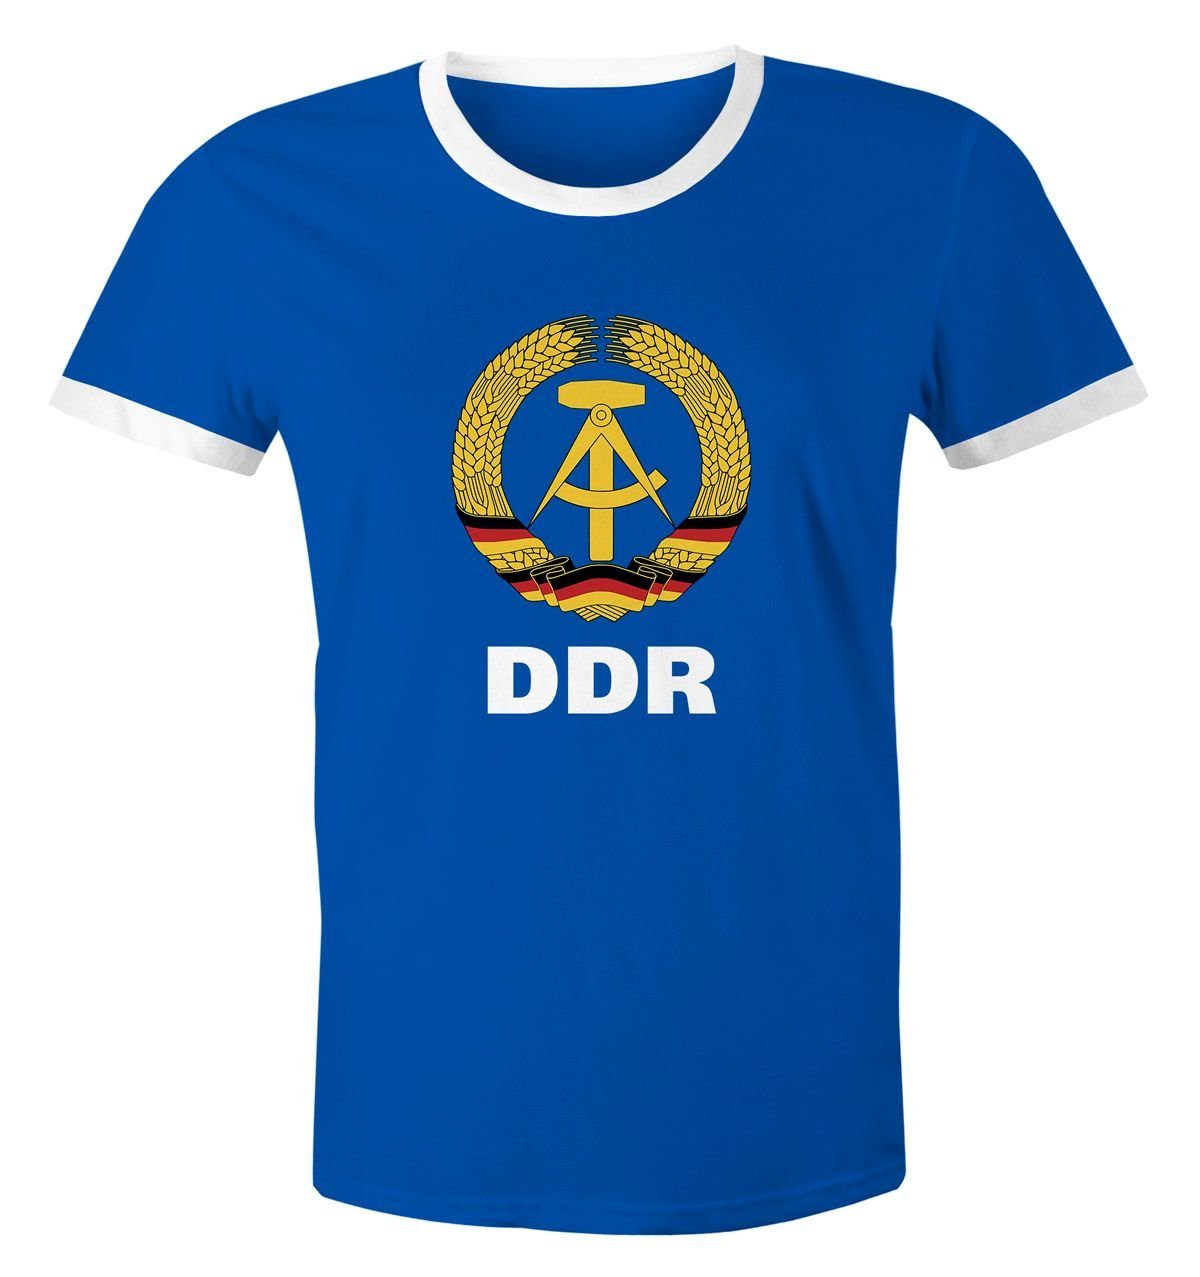 MoonWorks Print-Shirt Herren WM-Shirt DDR Fan Nostalgie Retro Moonworks® mit Print blau